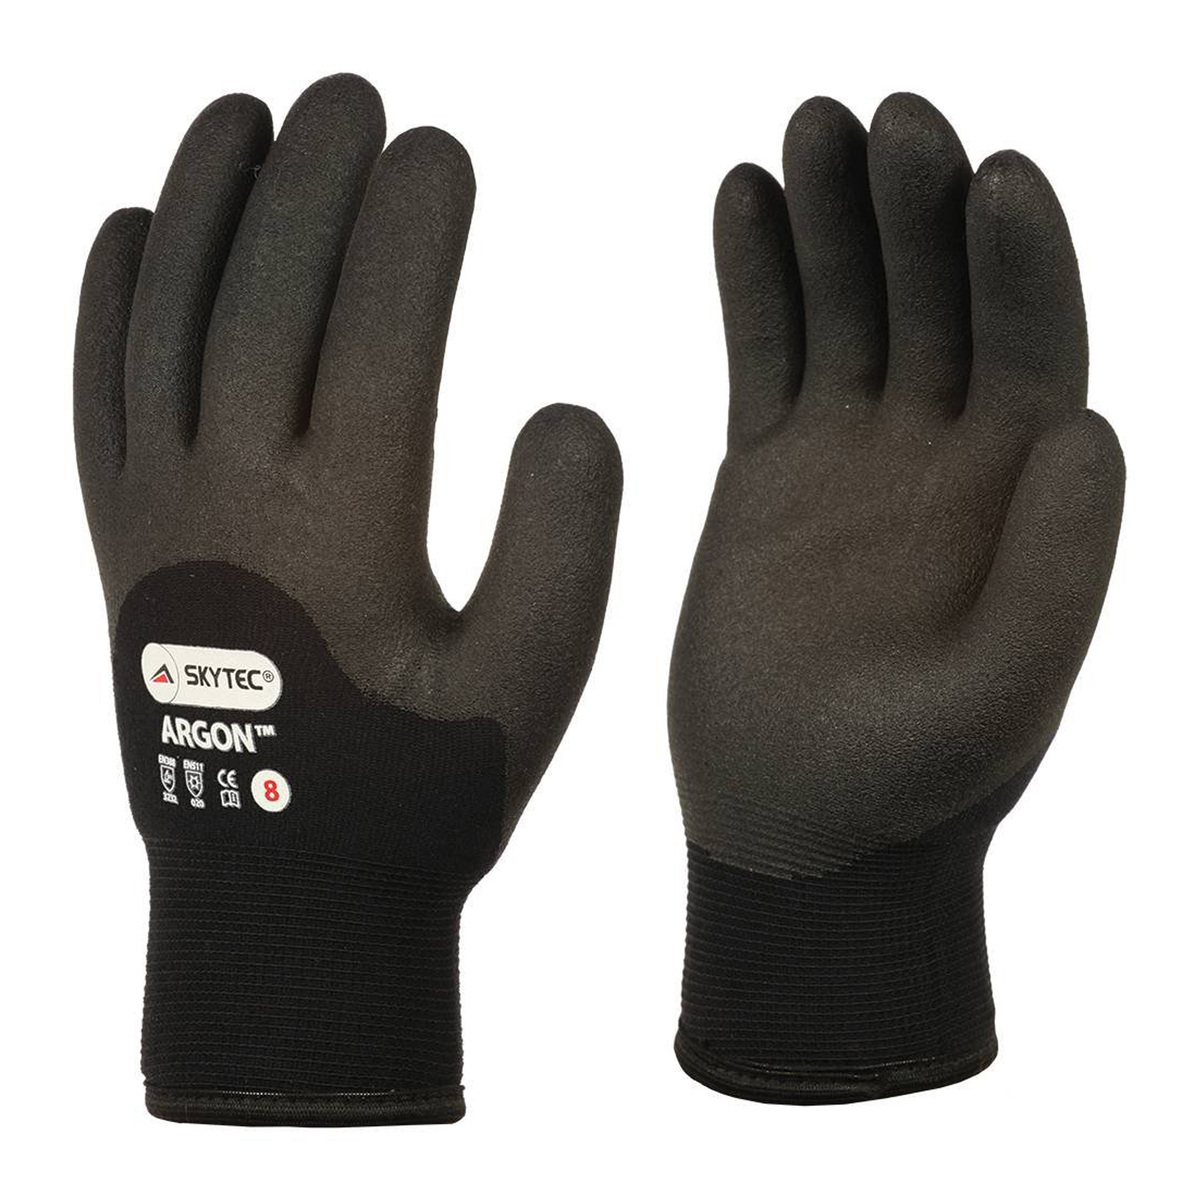 Argon Thermal Gloves Black size 9 